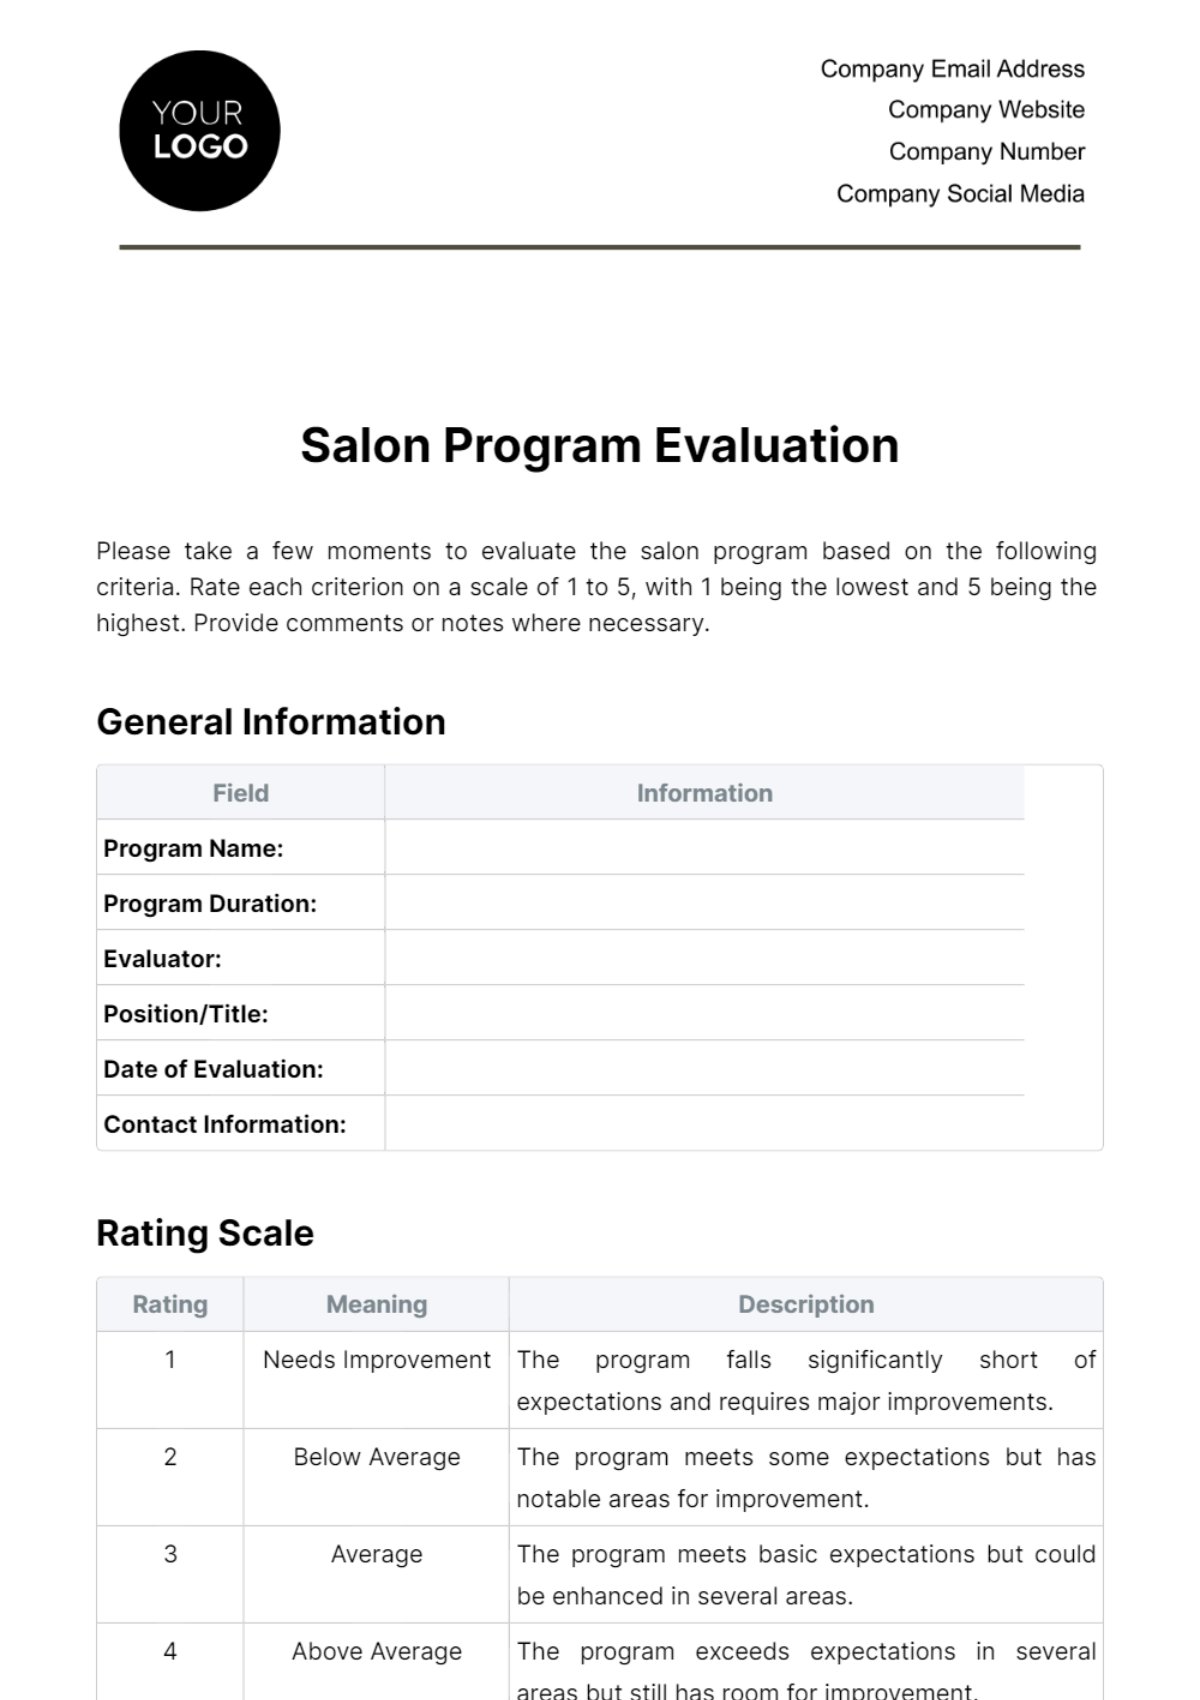 Free Salon Program Evaluation Template